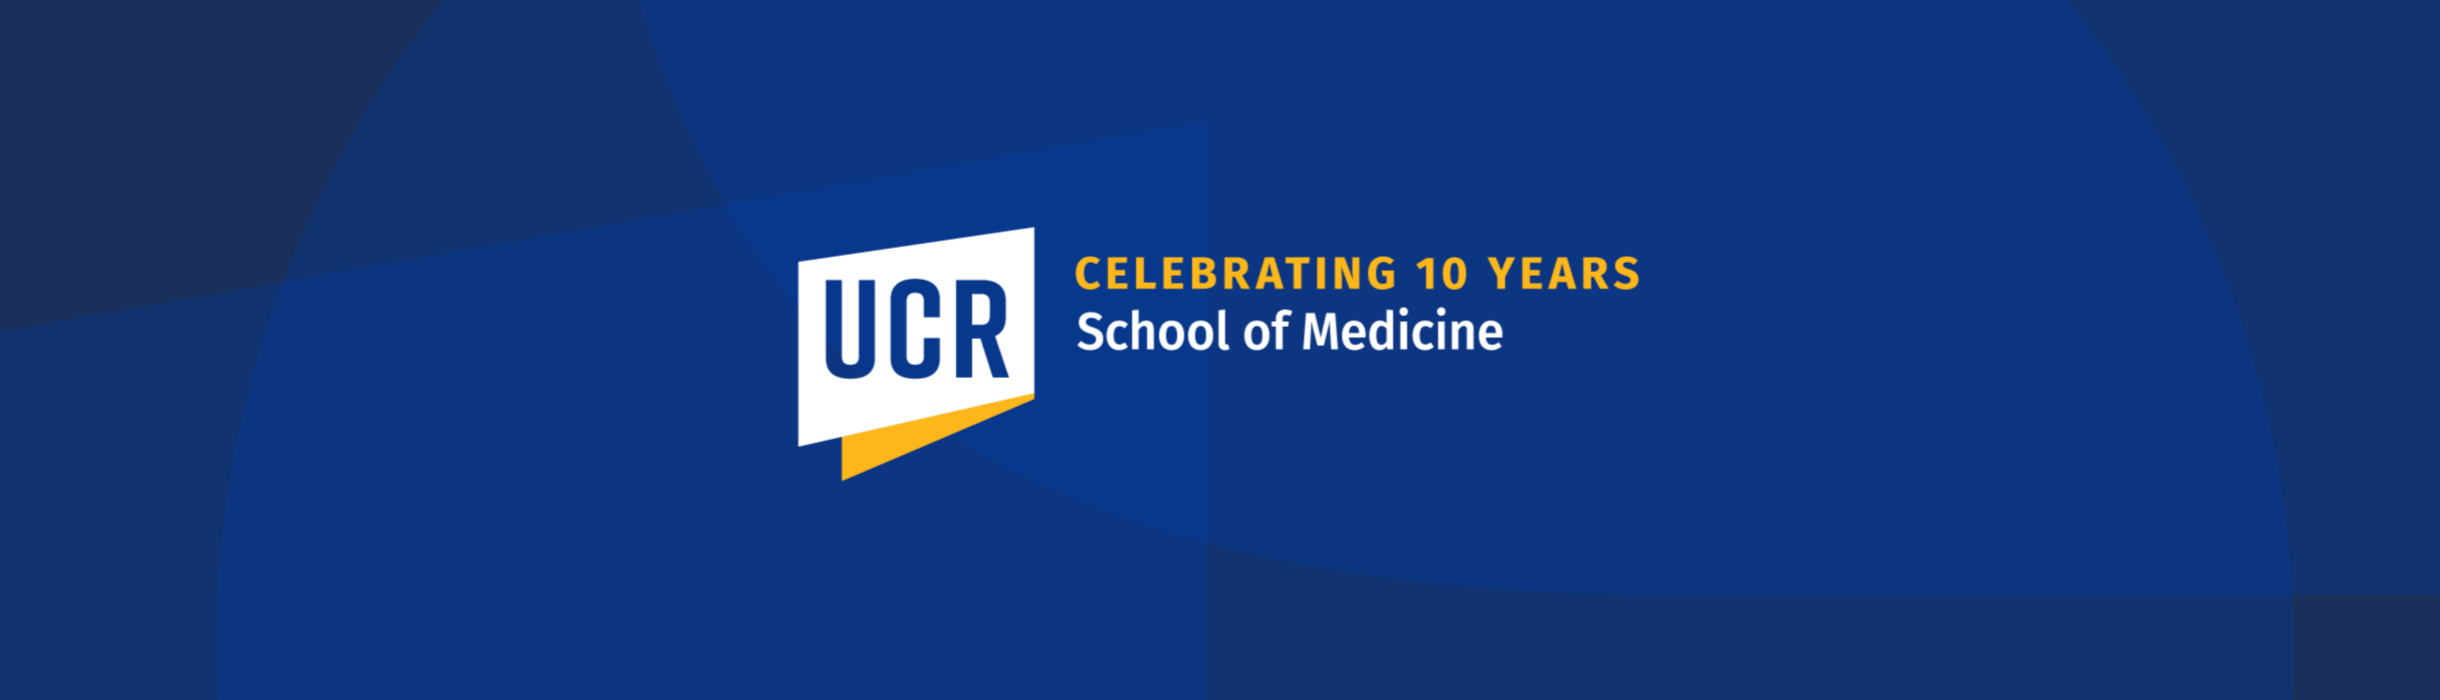 UCR School of Medicine - Celebrating 10 Years